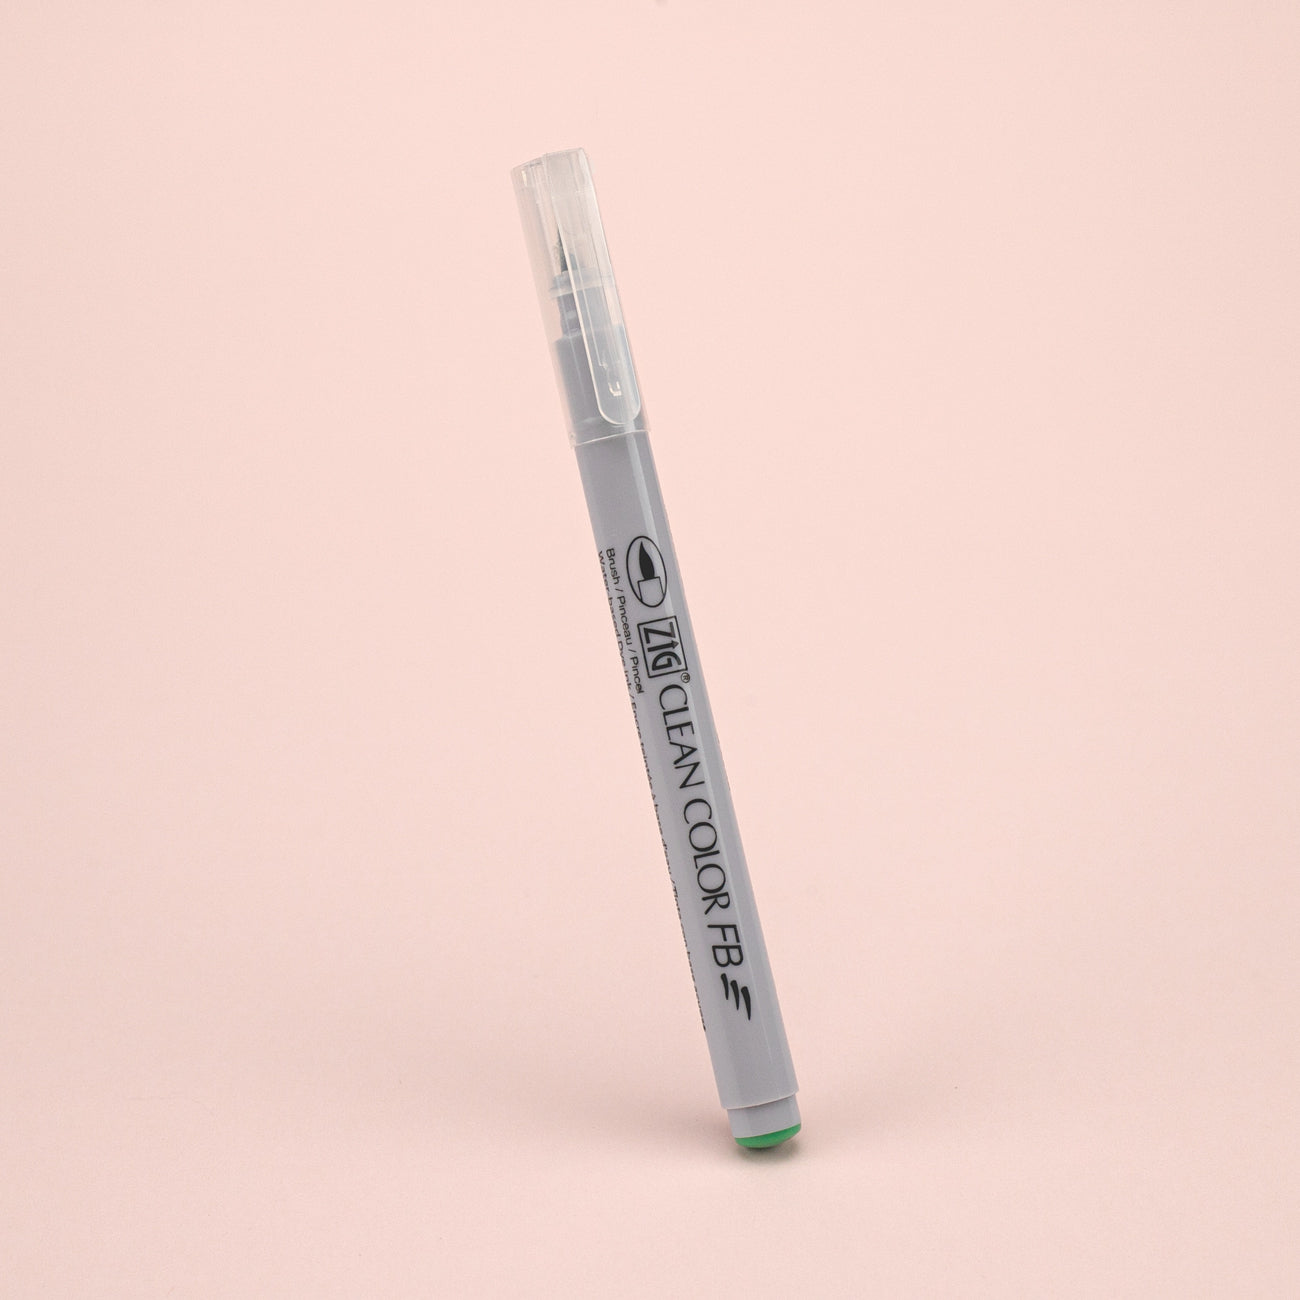 Kuretake ZIG Clean Color FB Felt Tip Brush Pen - Emerald Green - 048